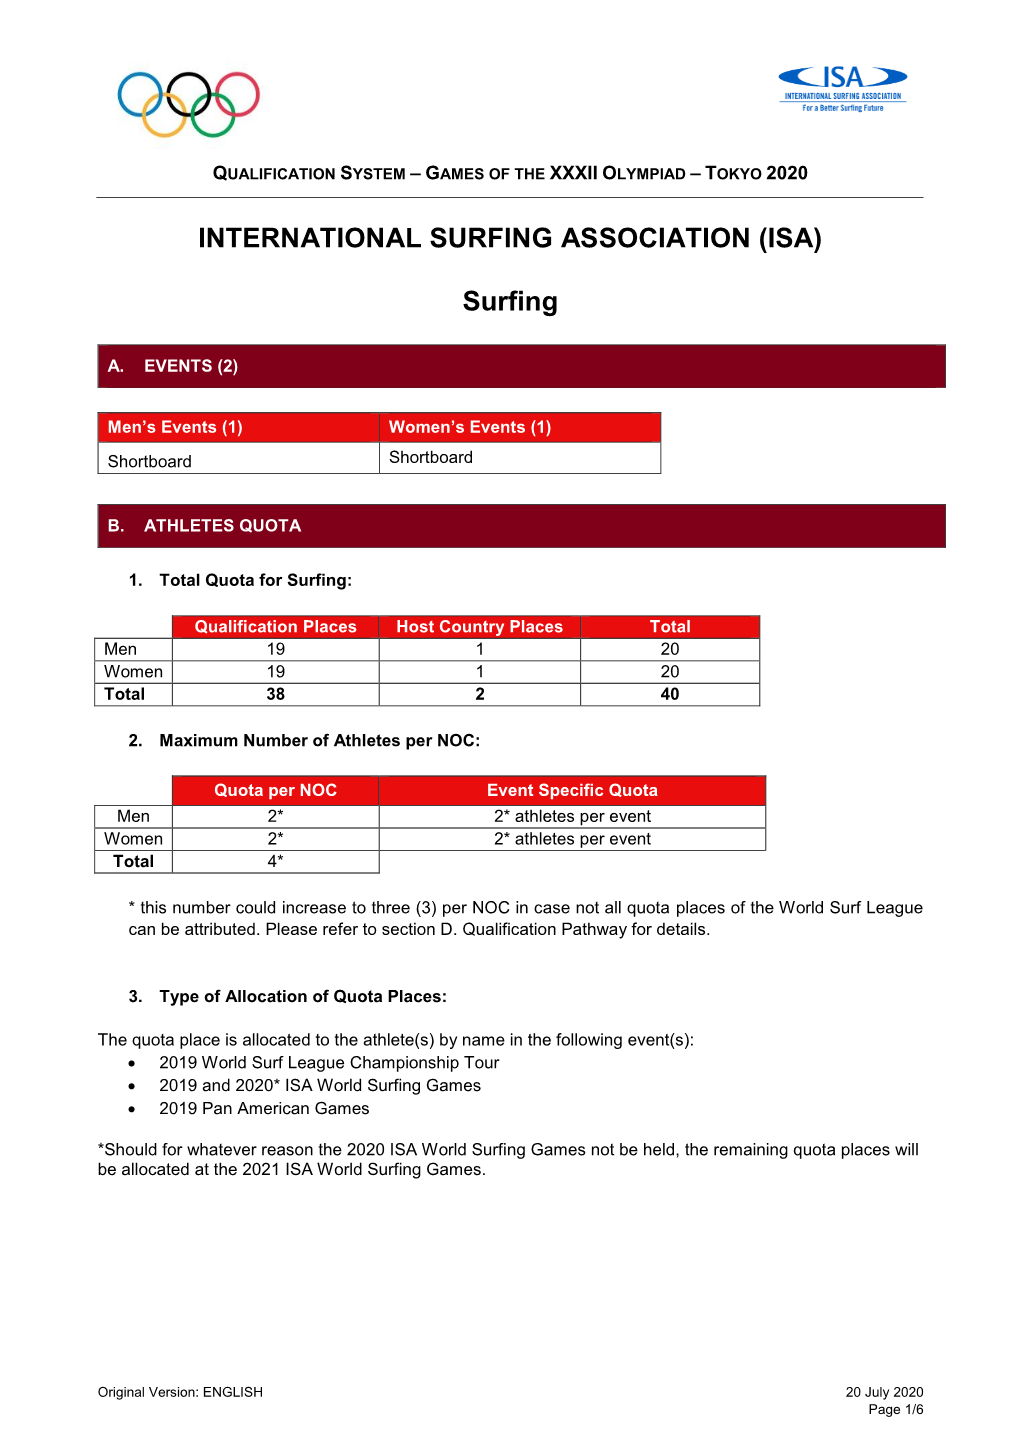 INTERNATIONAL SURFING ASSOCIATION (ISA) Surfing